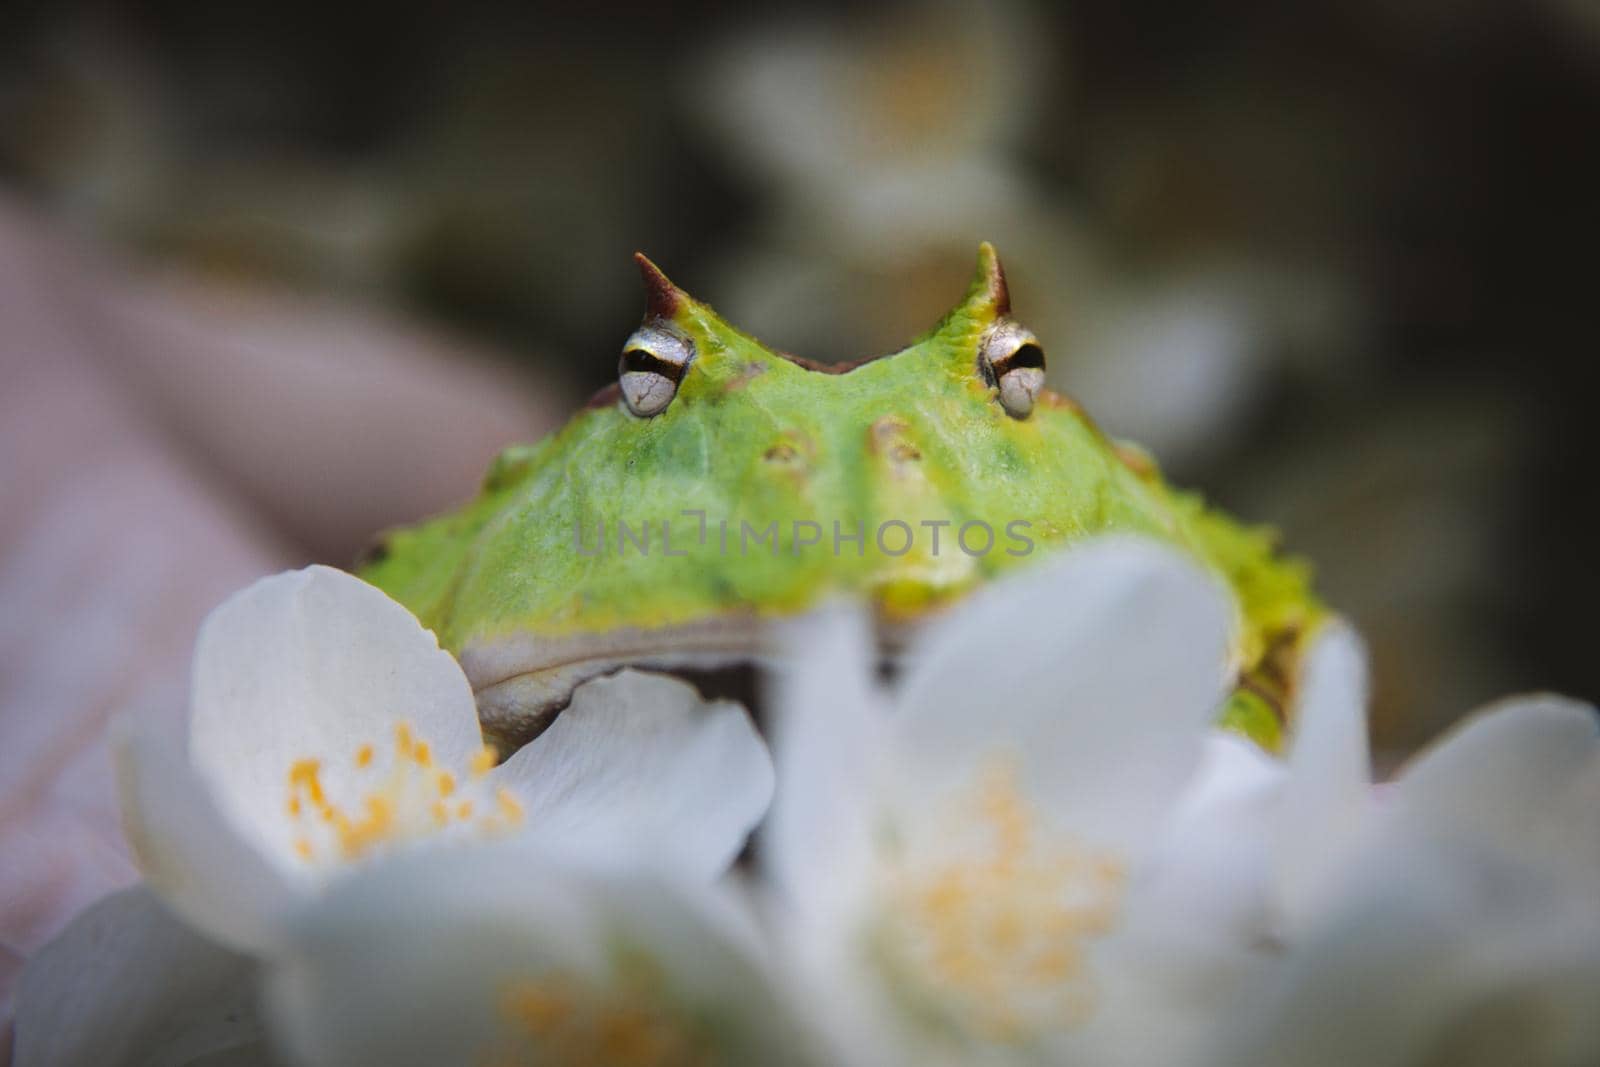 The Surinam horned frog with philadelphus flower bush by RosaJay